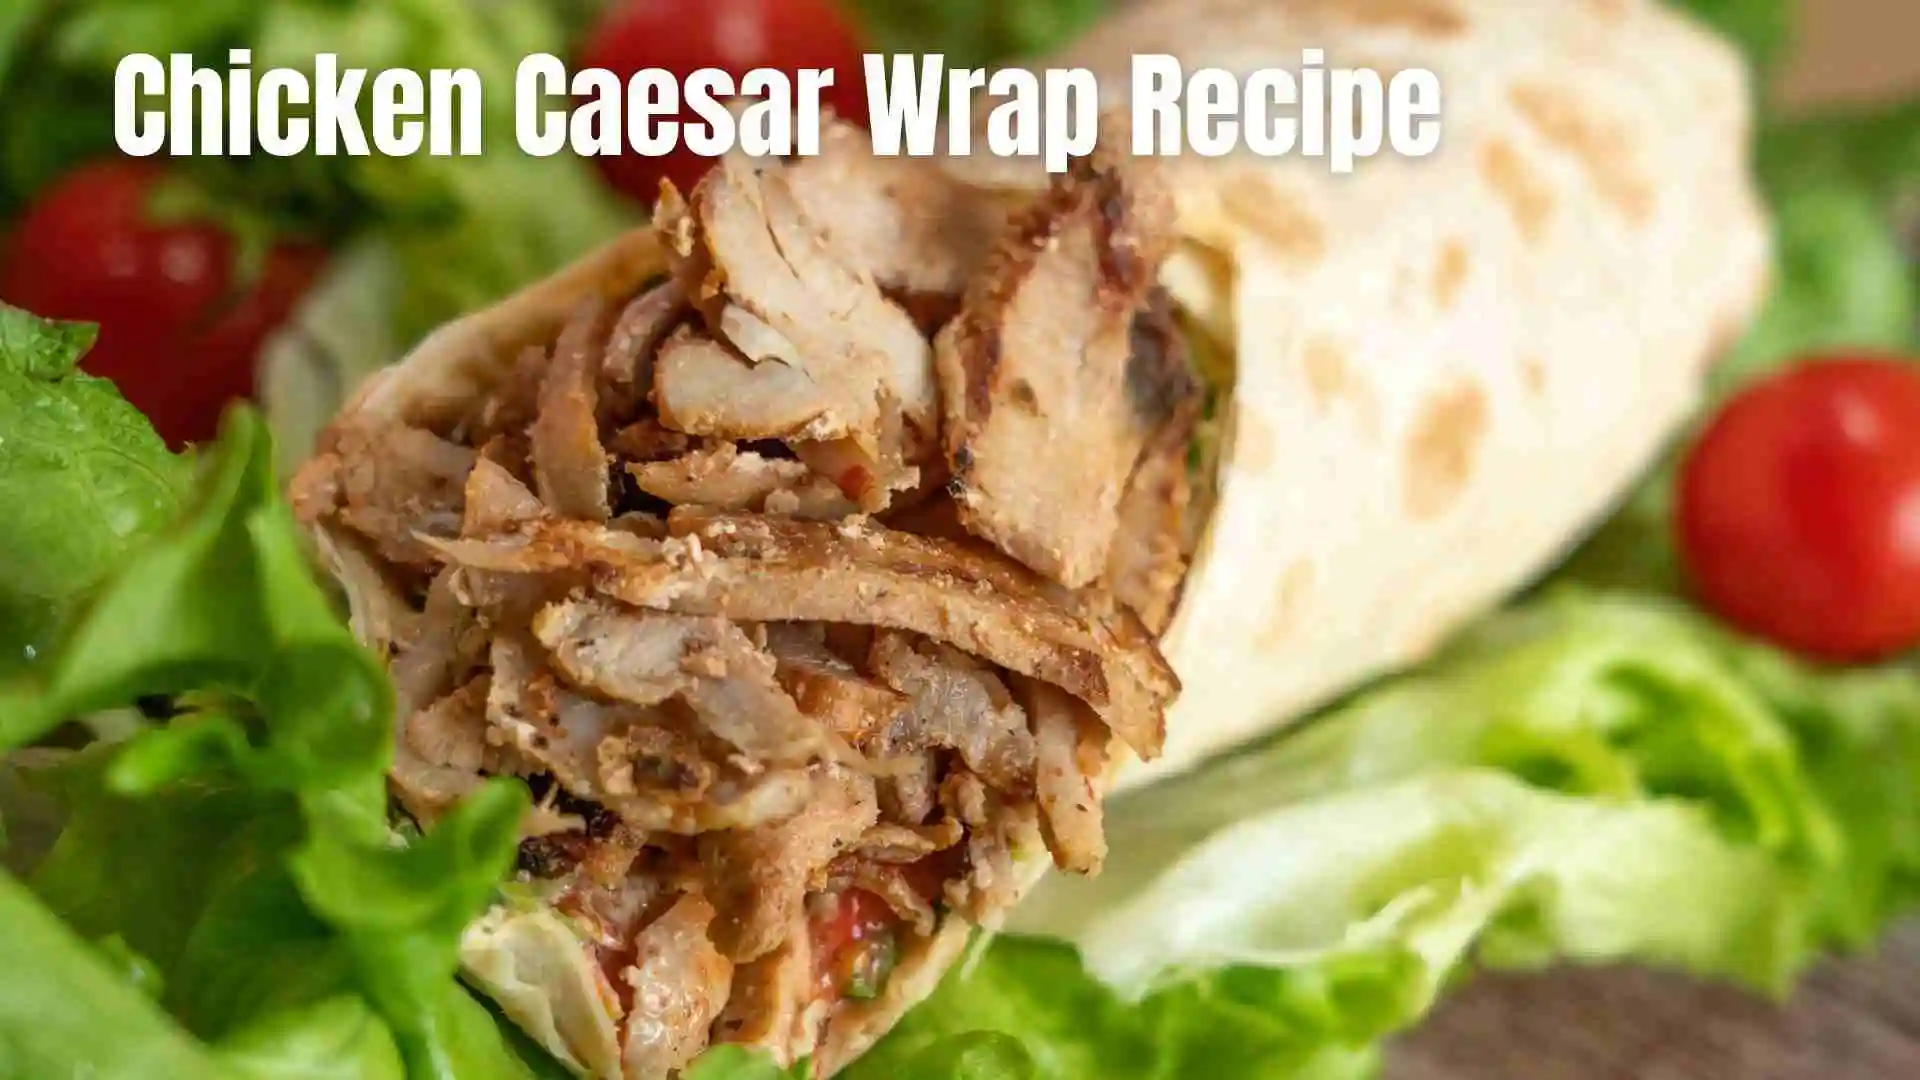 Chicken Caesar Wrap Recipe 2023 - McDonald's